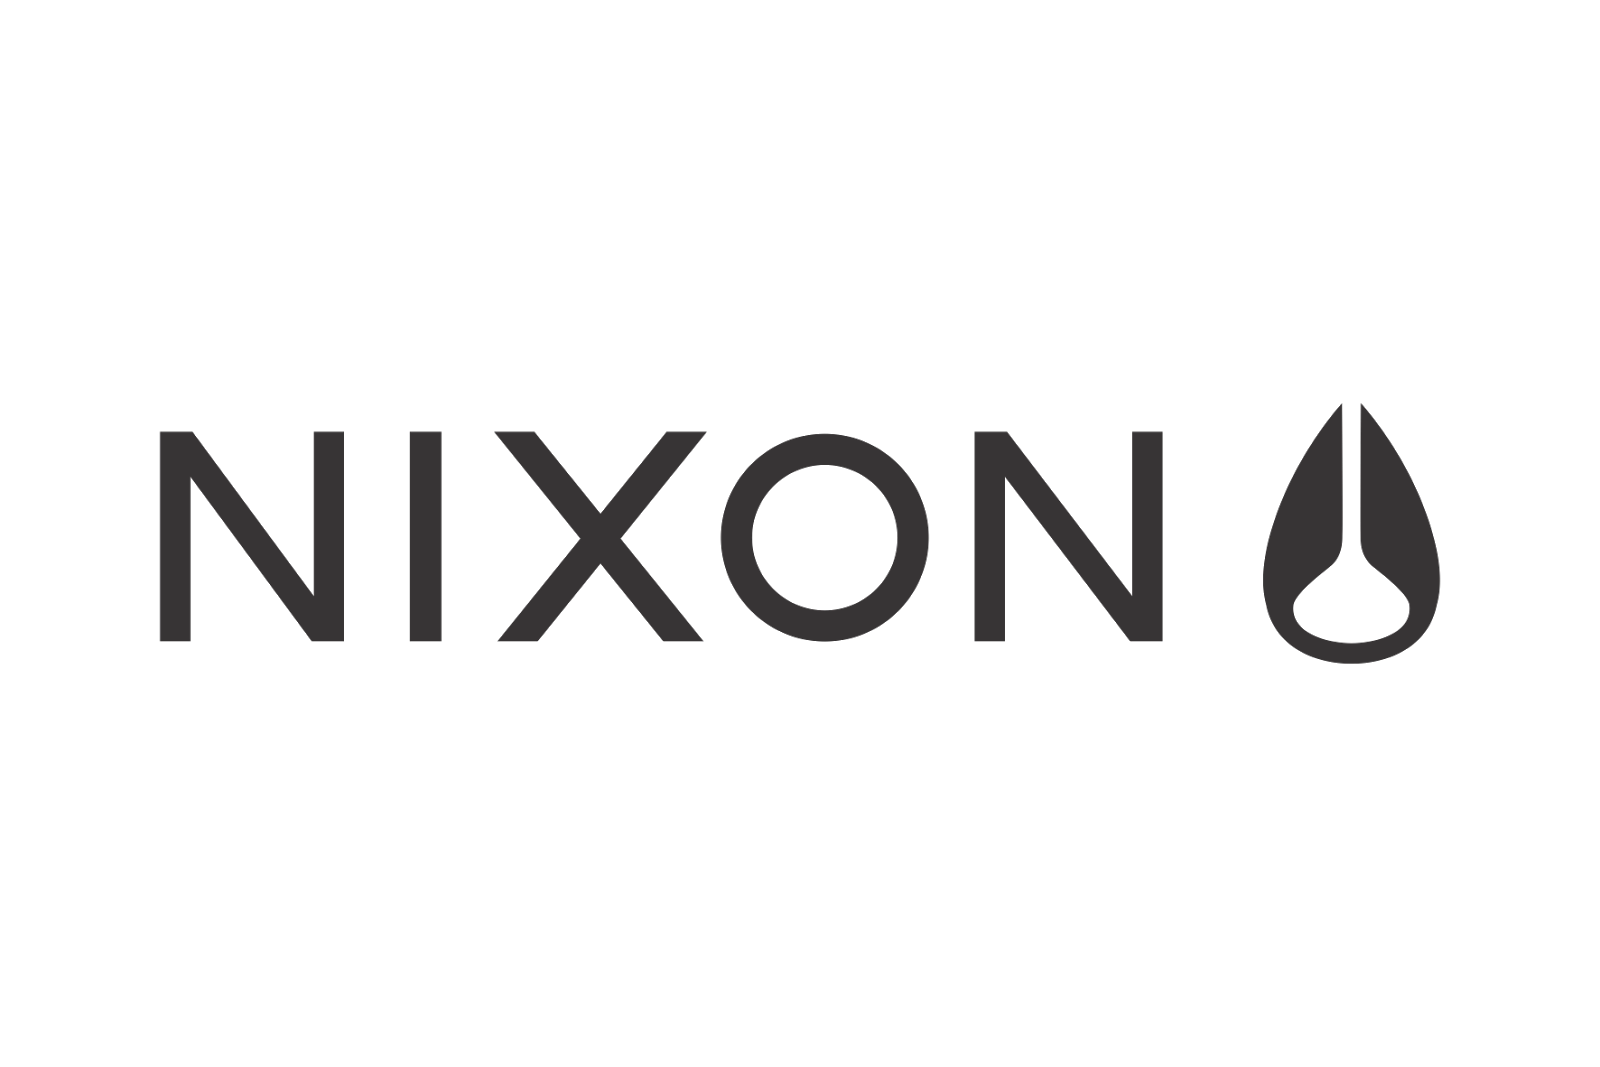 Nixon Logo